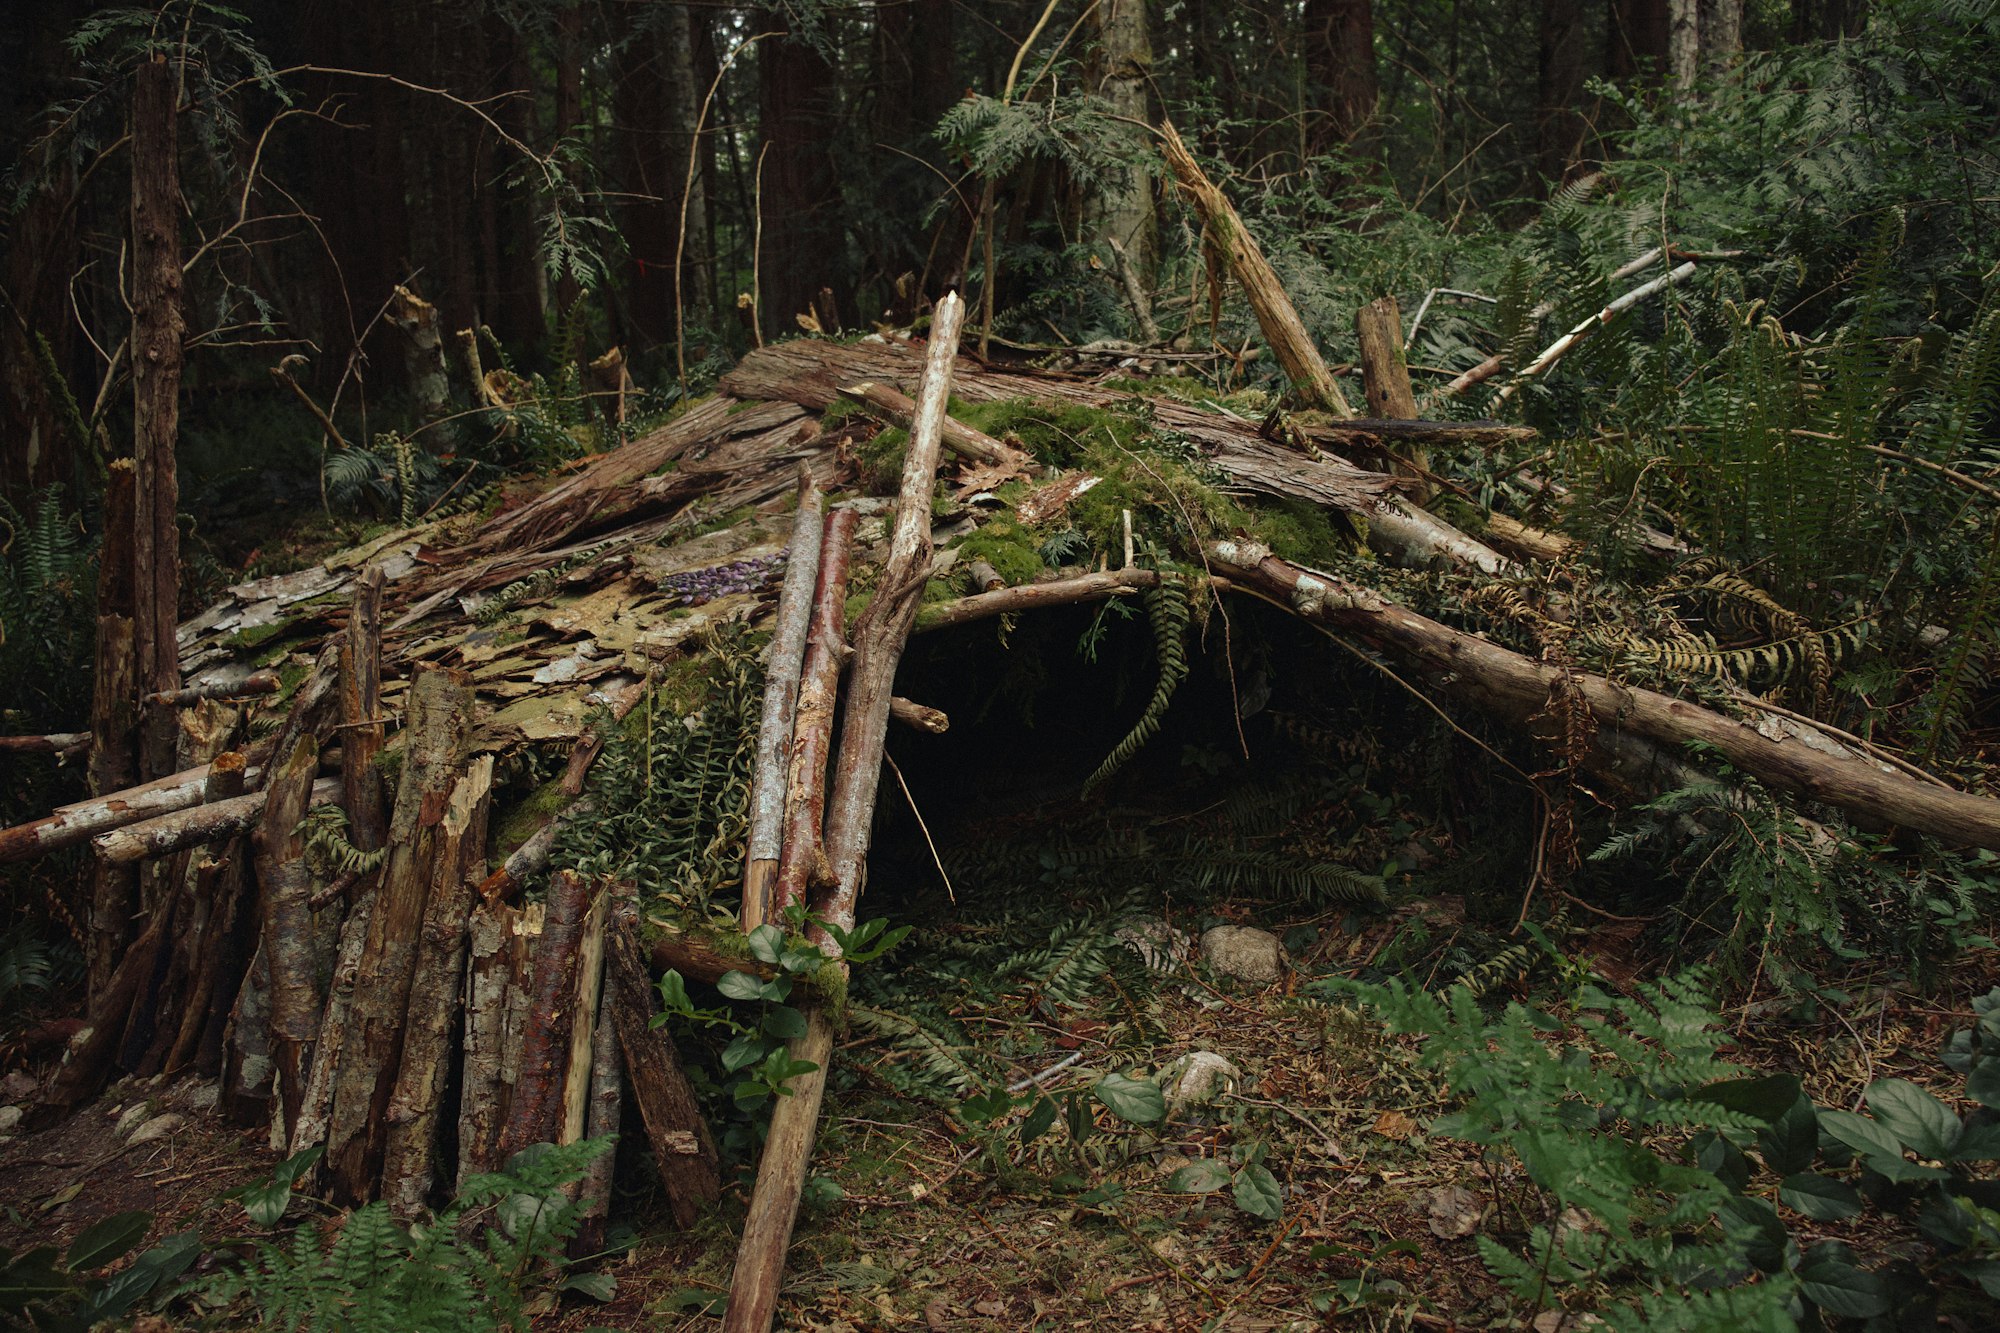 a survival shelter